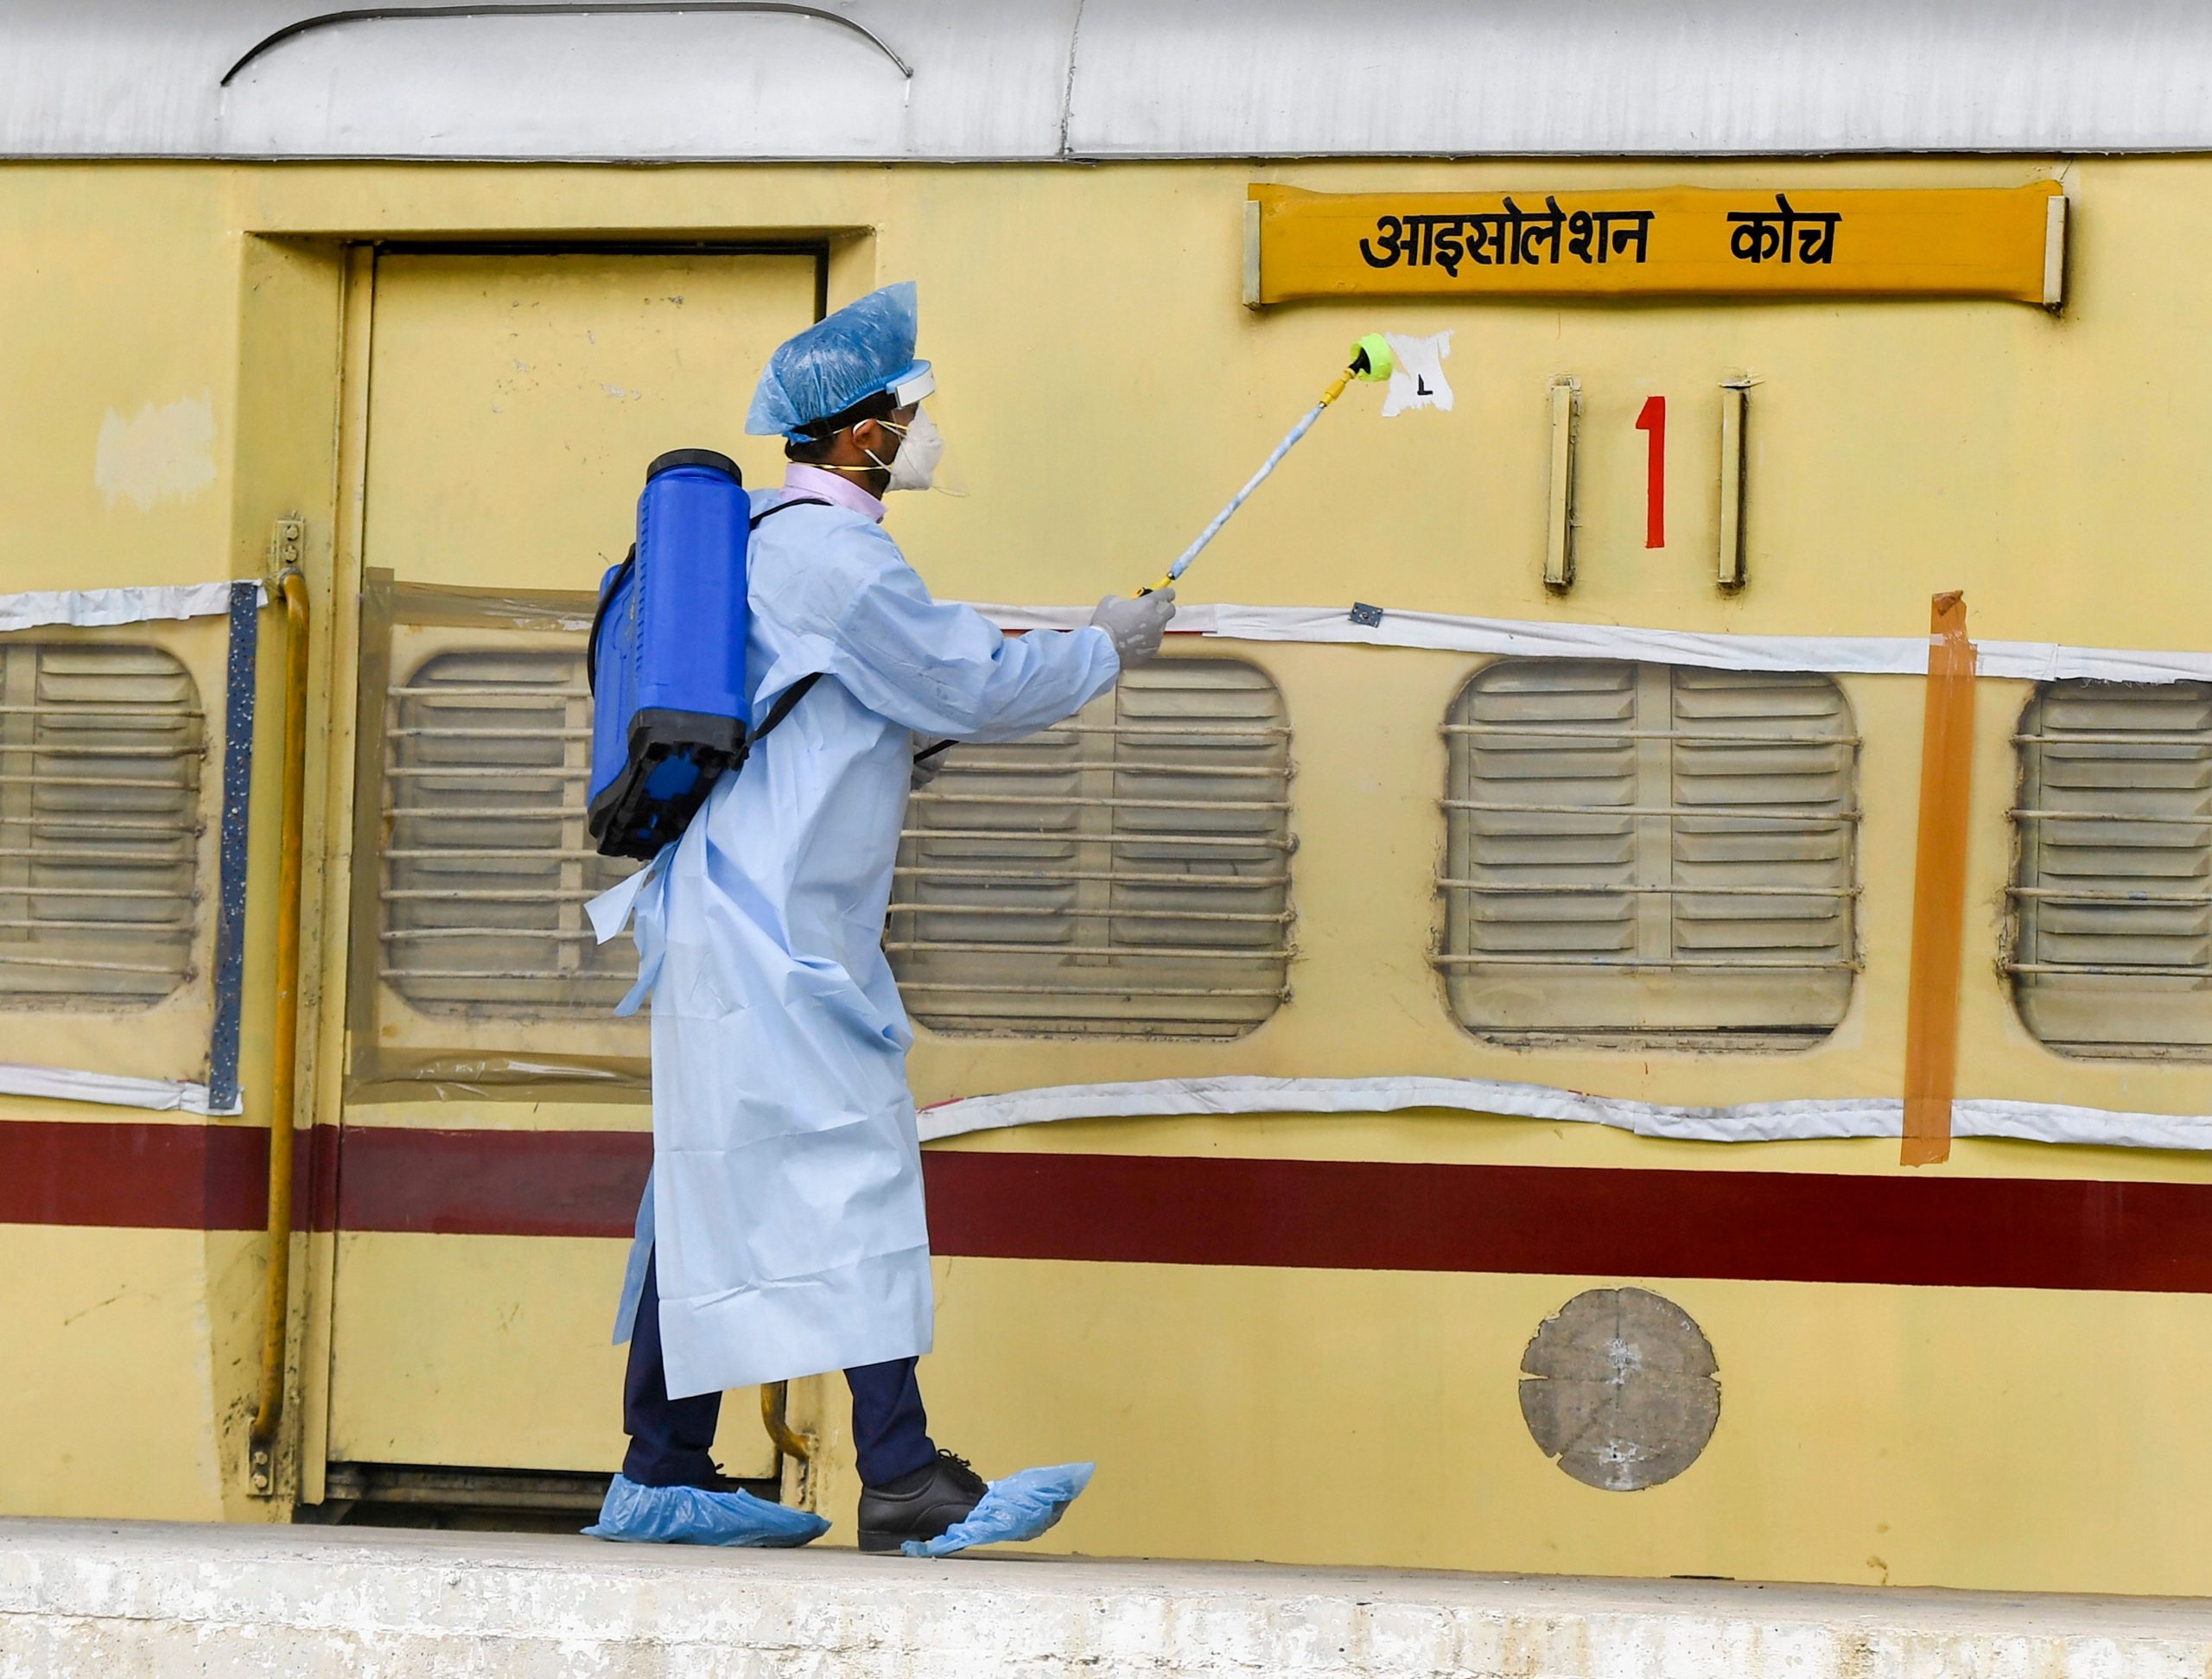 Special suburban railway services in Mumbai for NEET, JEE students: Piyush Goyal